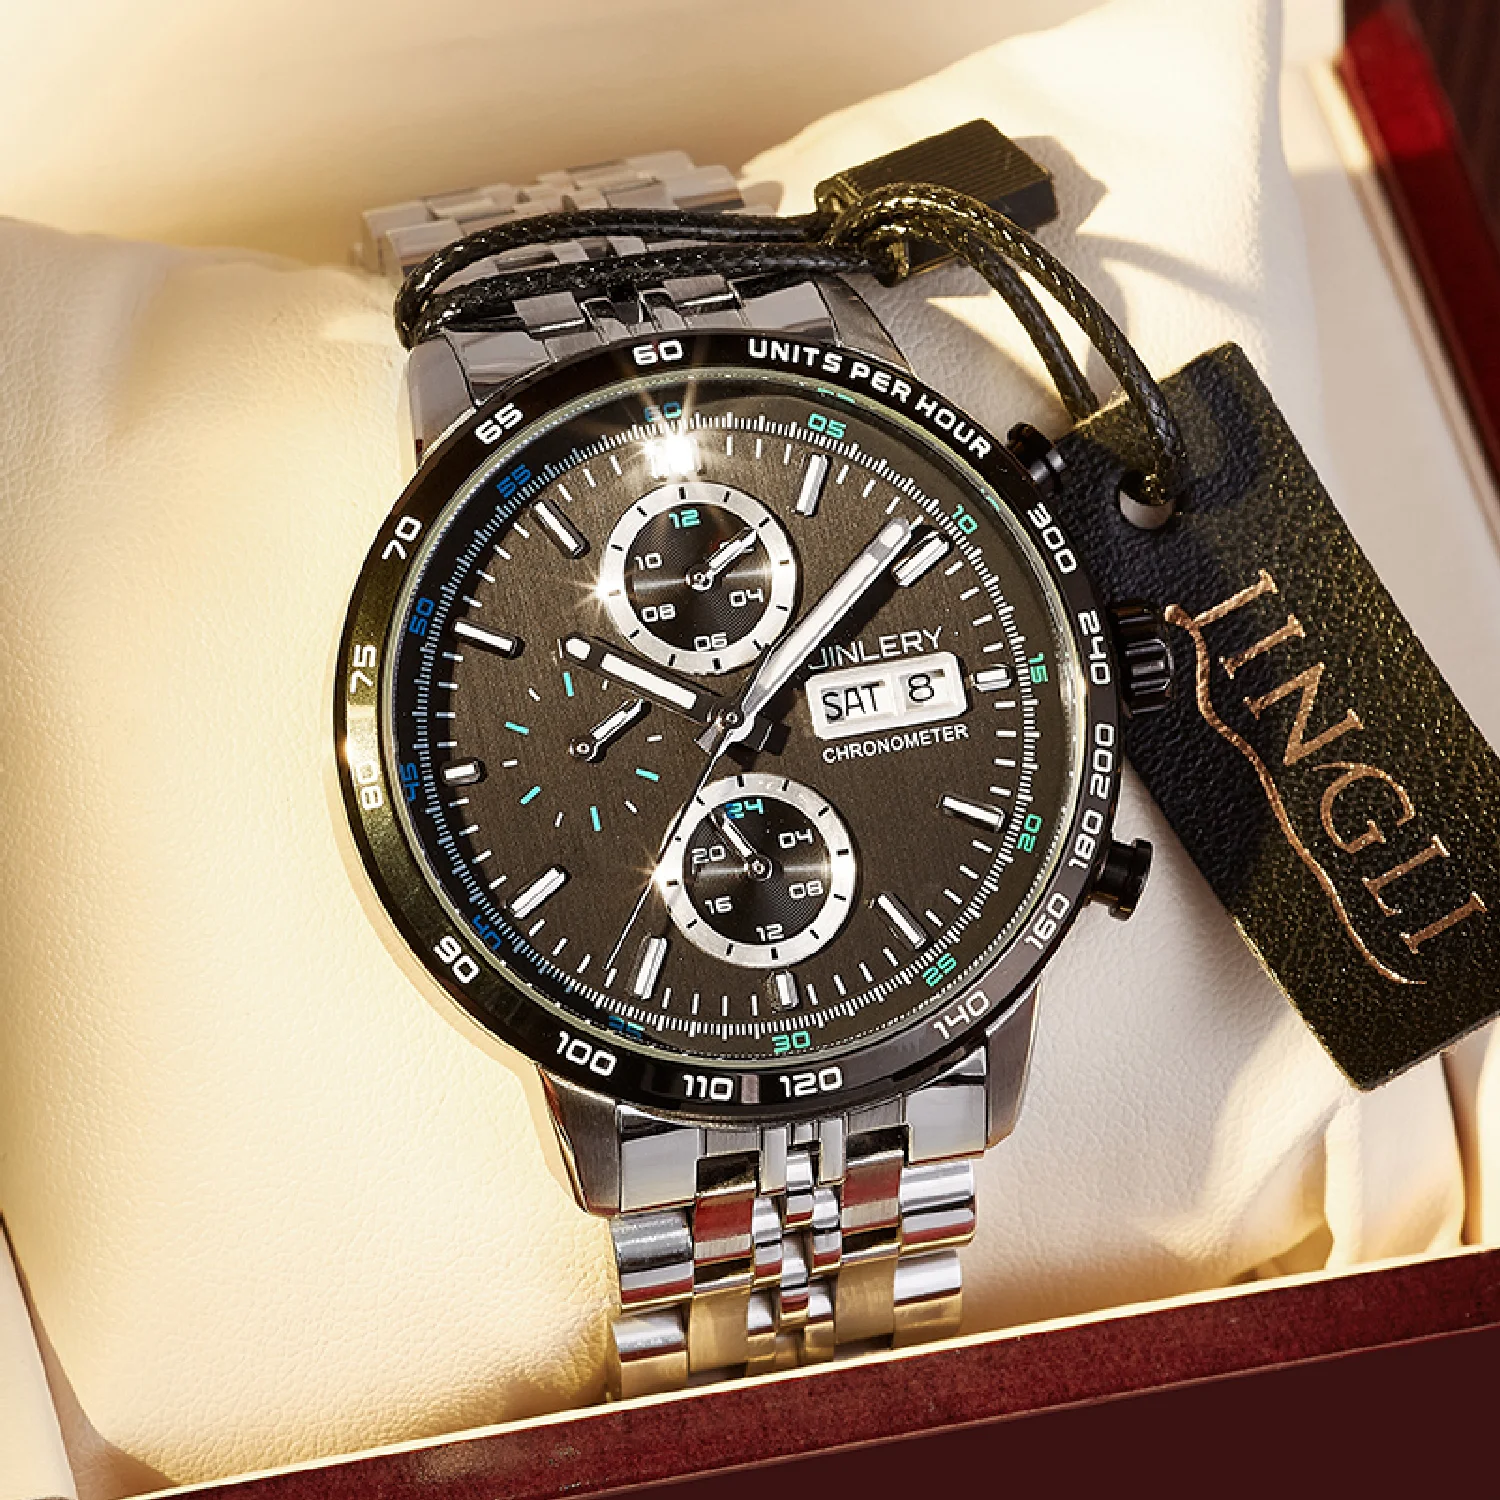 

JINLERY Luxury Men's Watch Fully Automatic Mechanical Wristwatch Brand Business Stainless Steel Belt Watch for Men New relogio